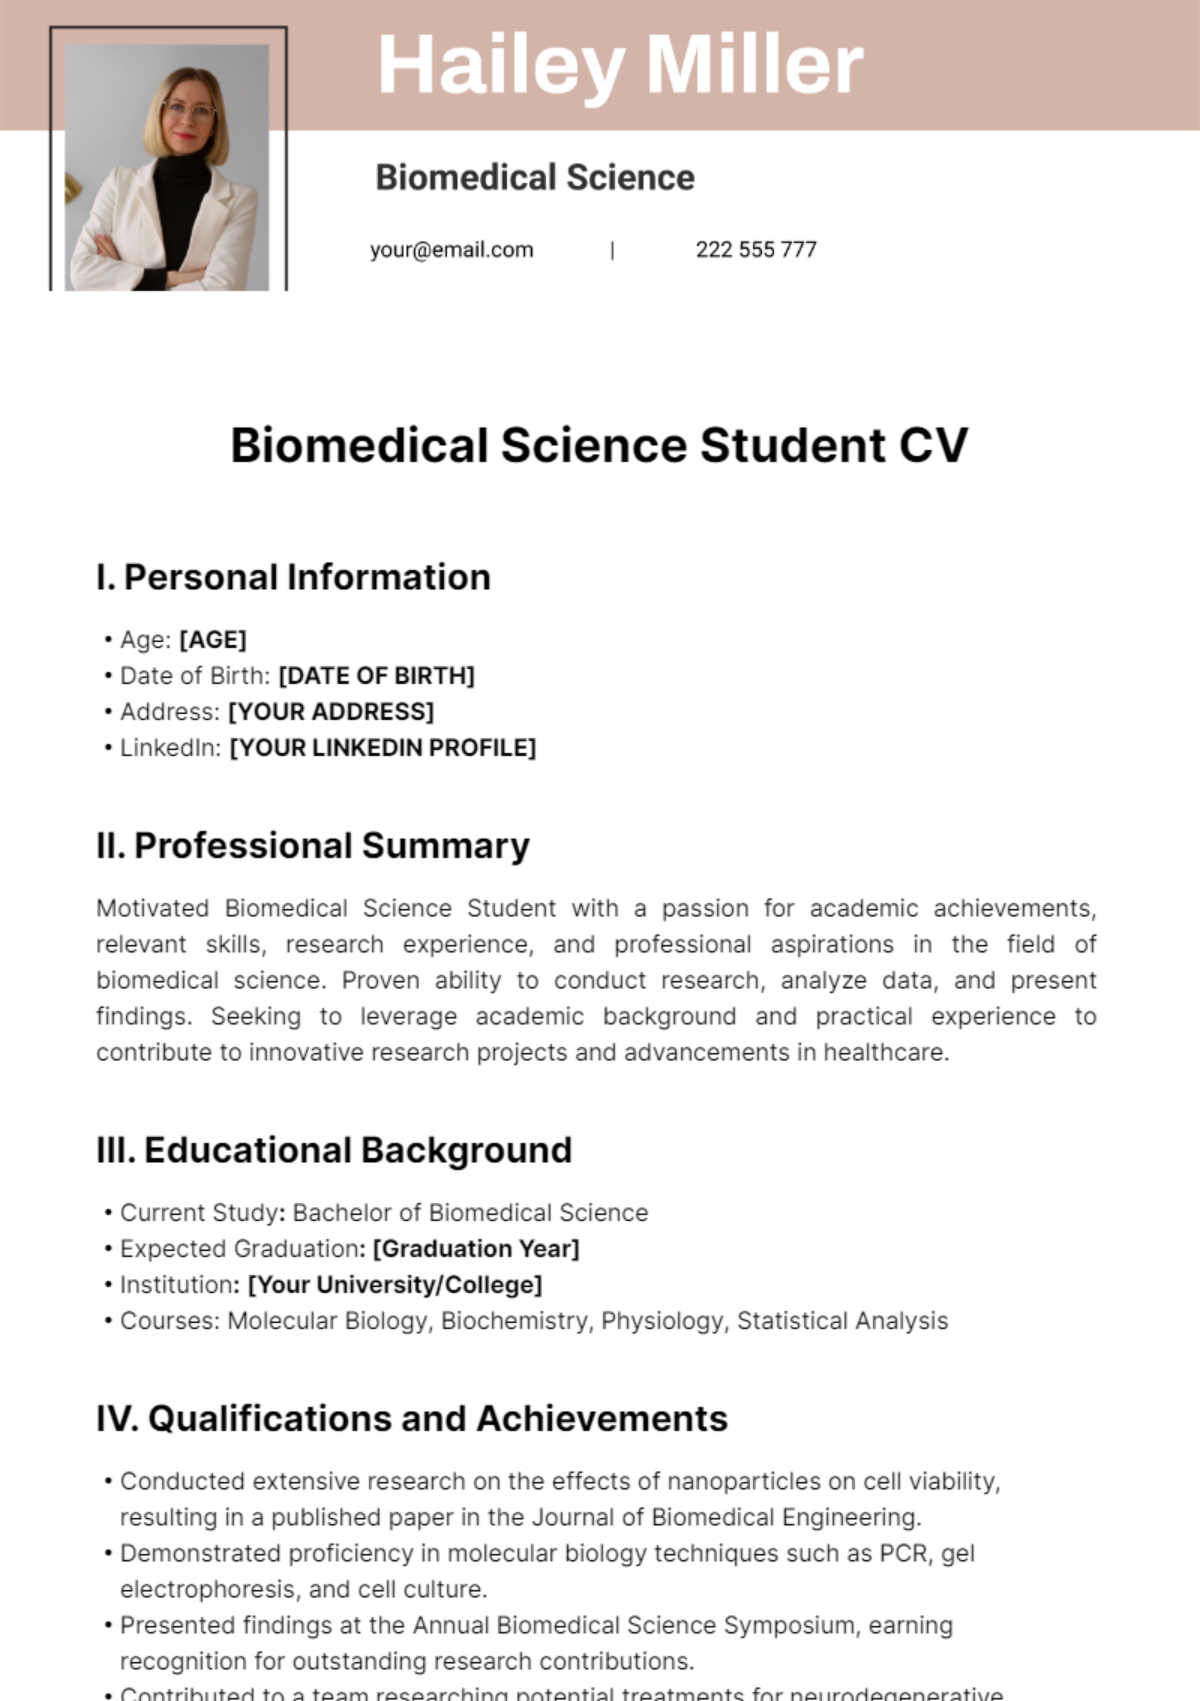 Biomedical Science Student CV Template